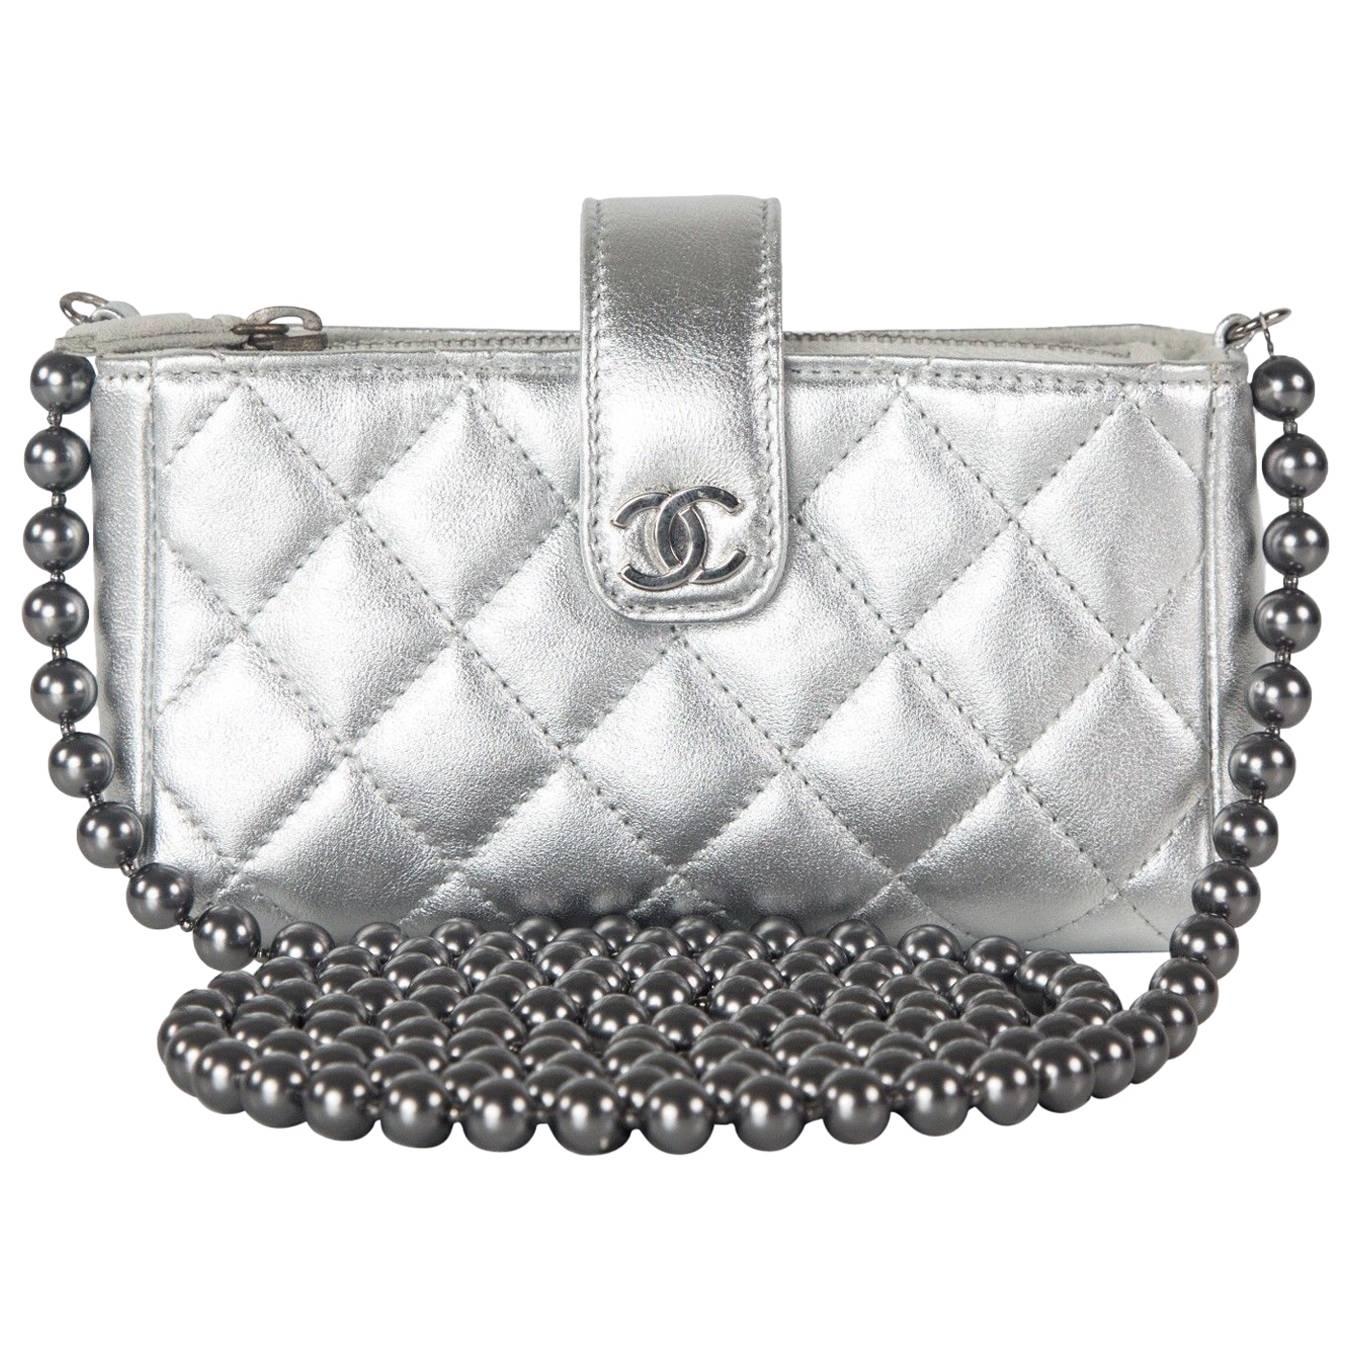 Chanel - New Pearl Crossbody Shoulder Bag - Silver Ocase CC Leather O Case Phone